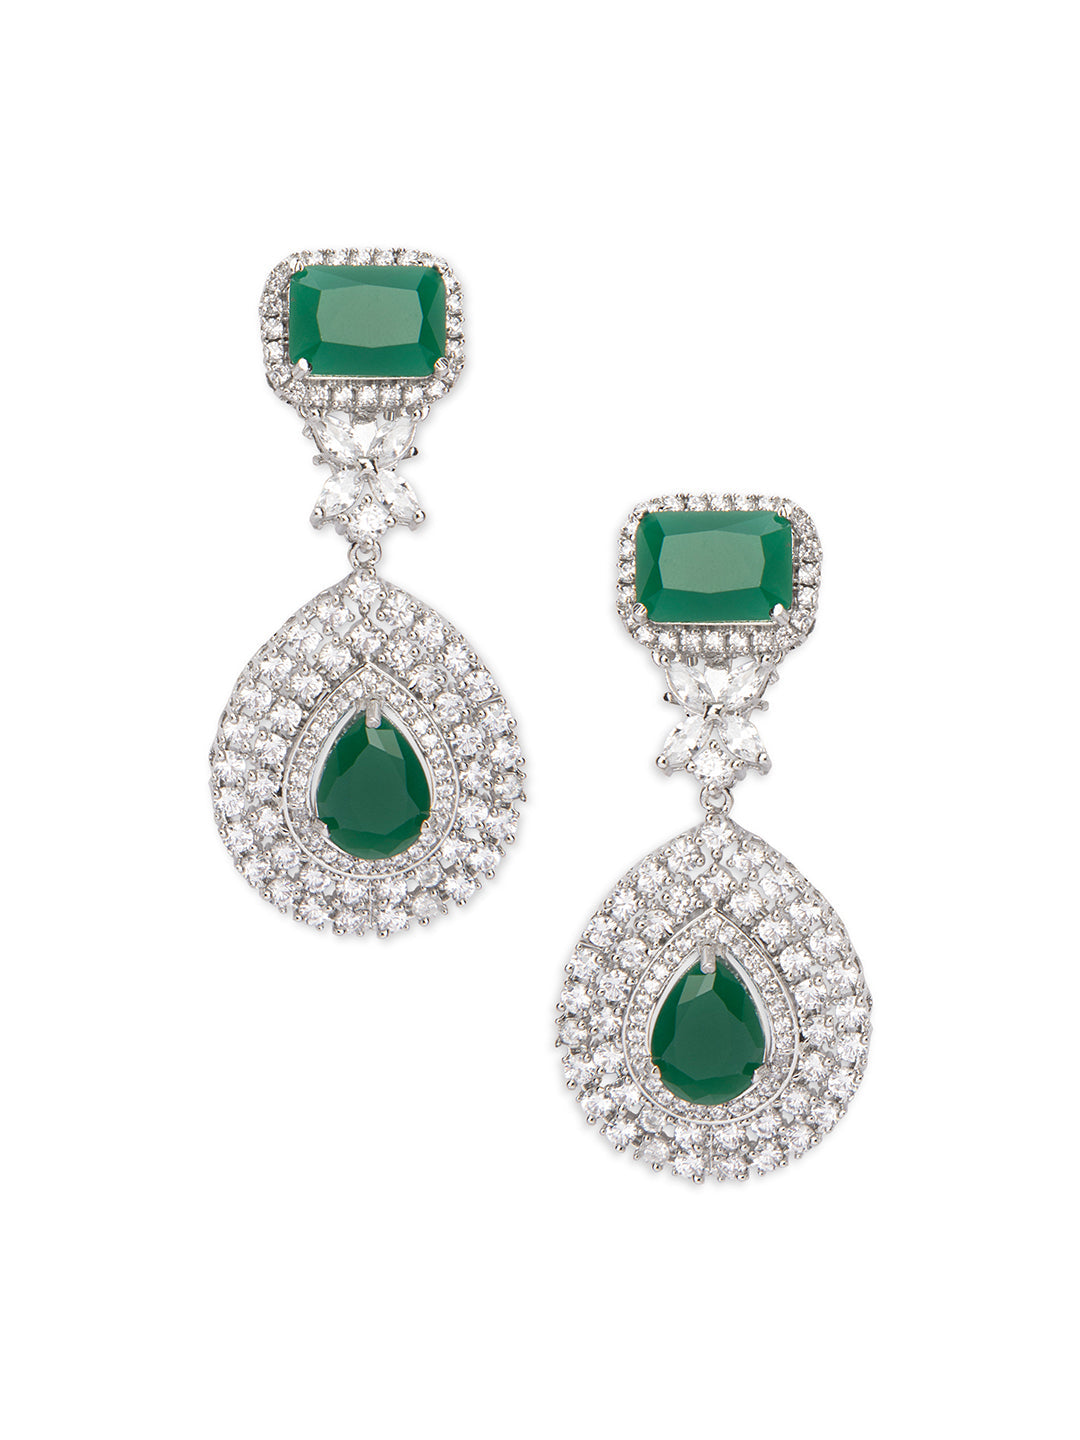 Harmony of Emerald Green CZ Necklace Set 